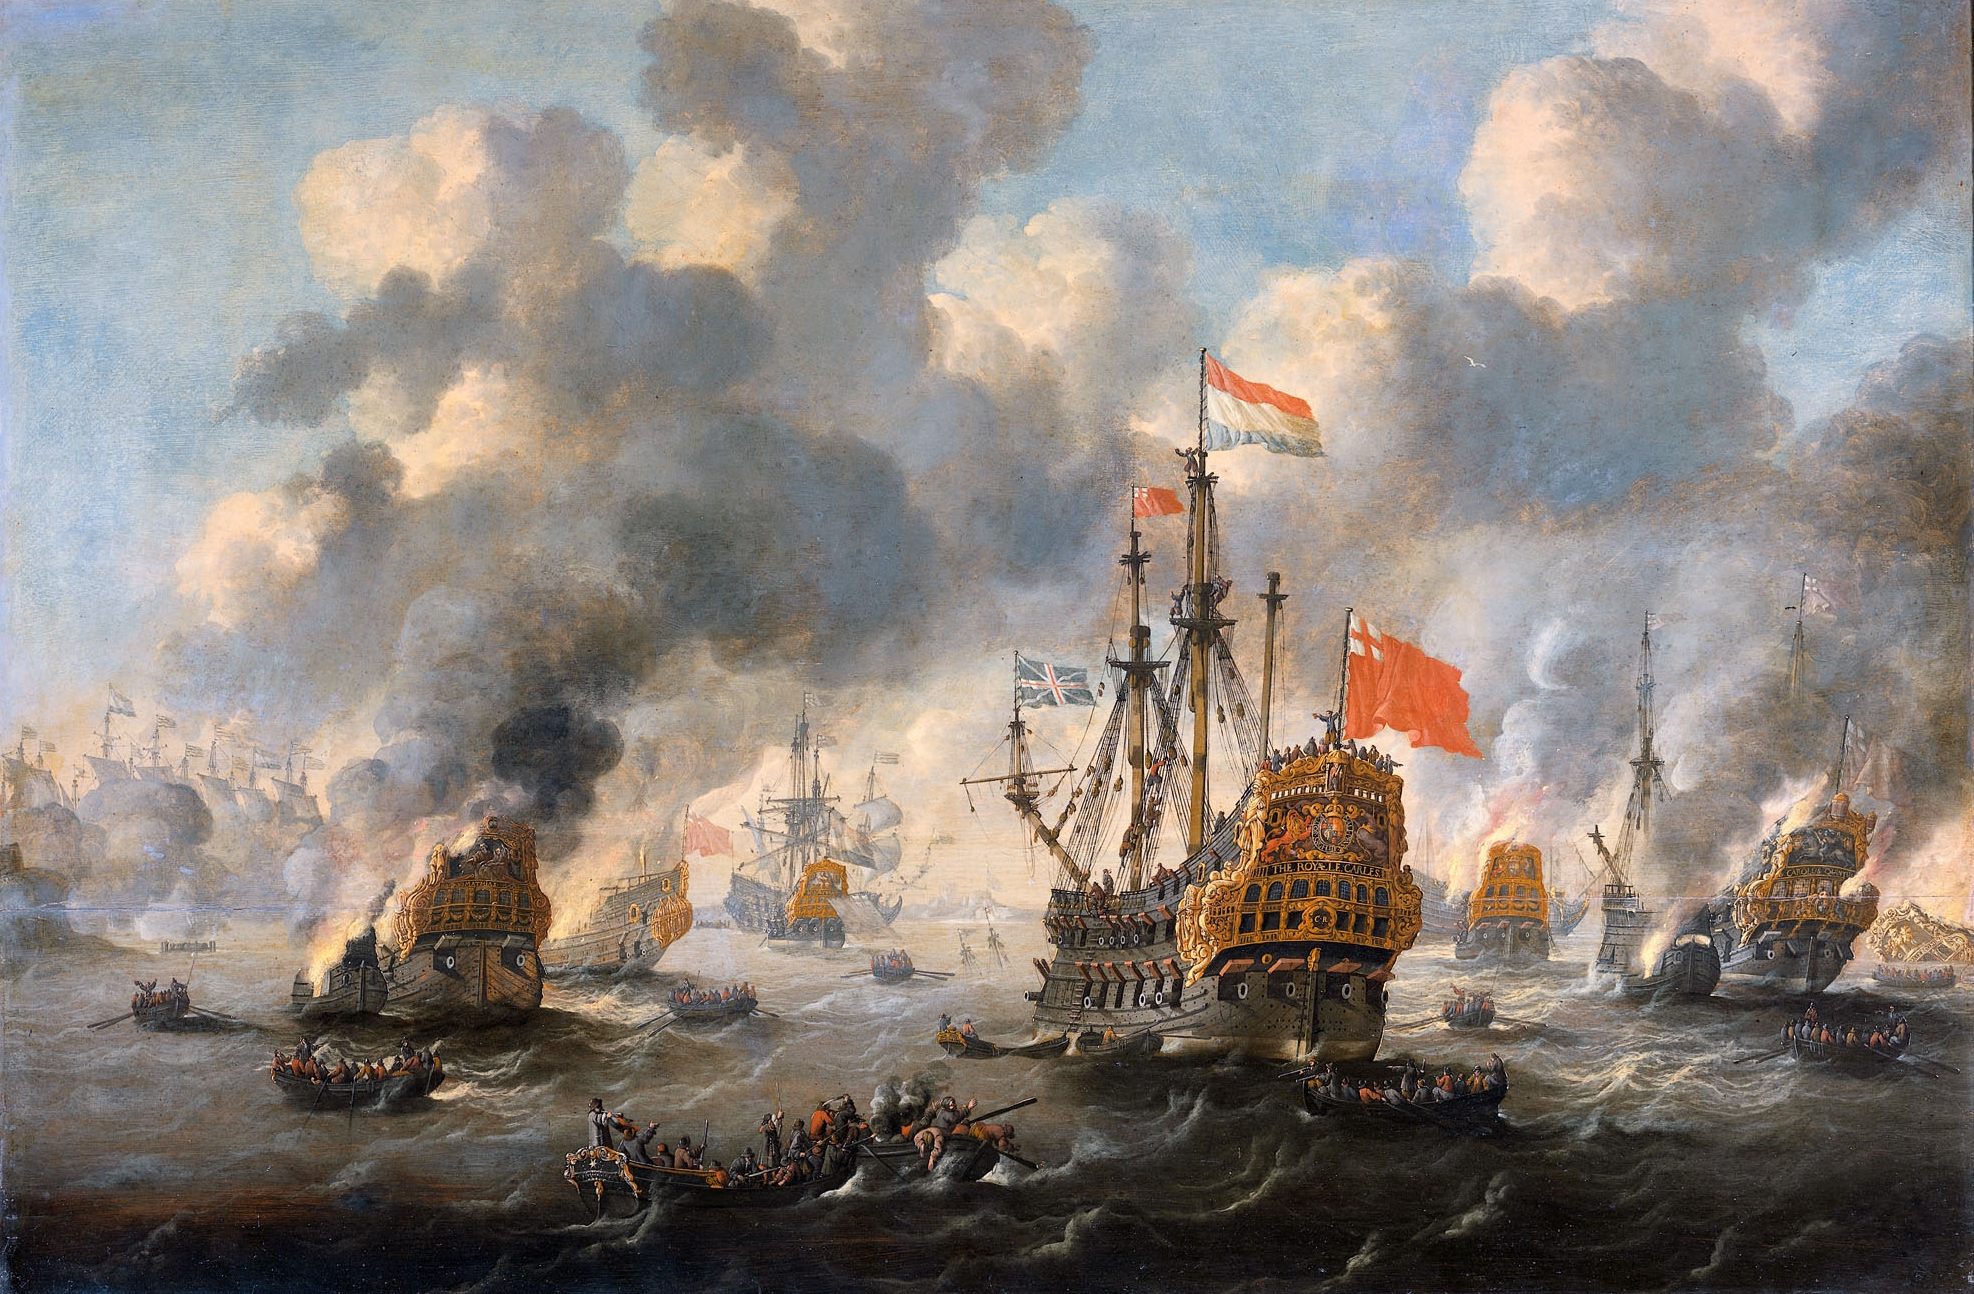 17th-century Dutch shipwreck discovered